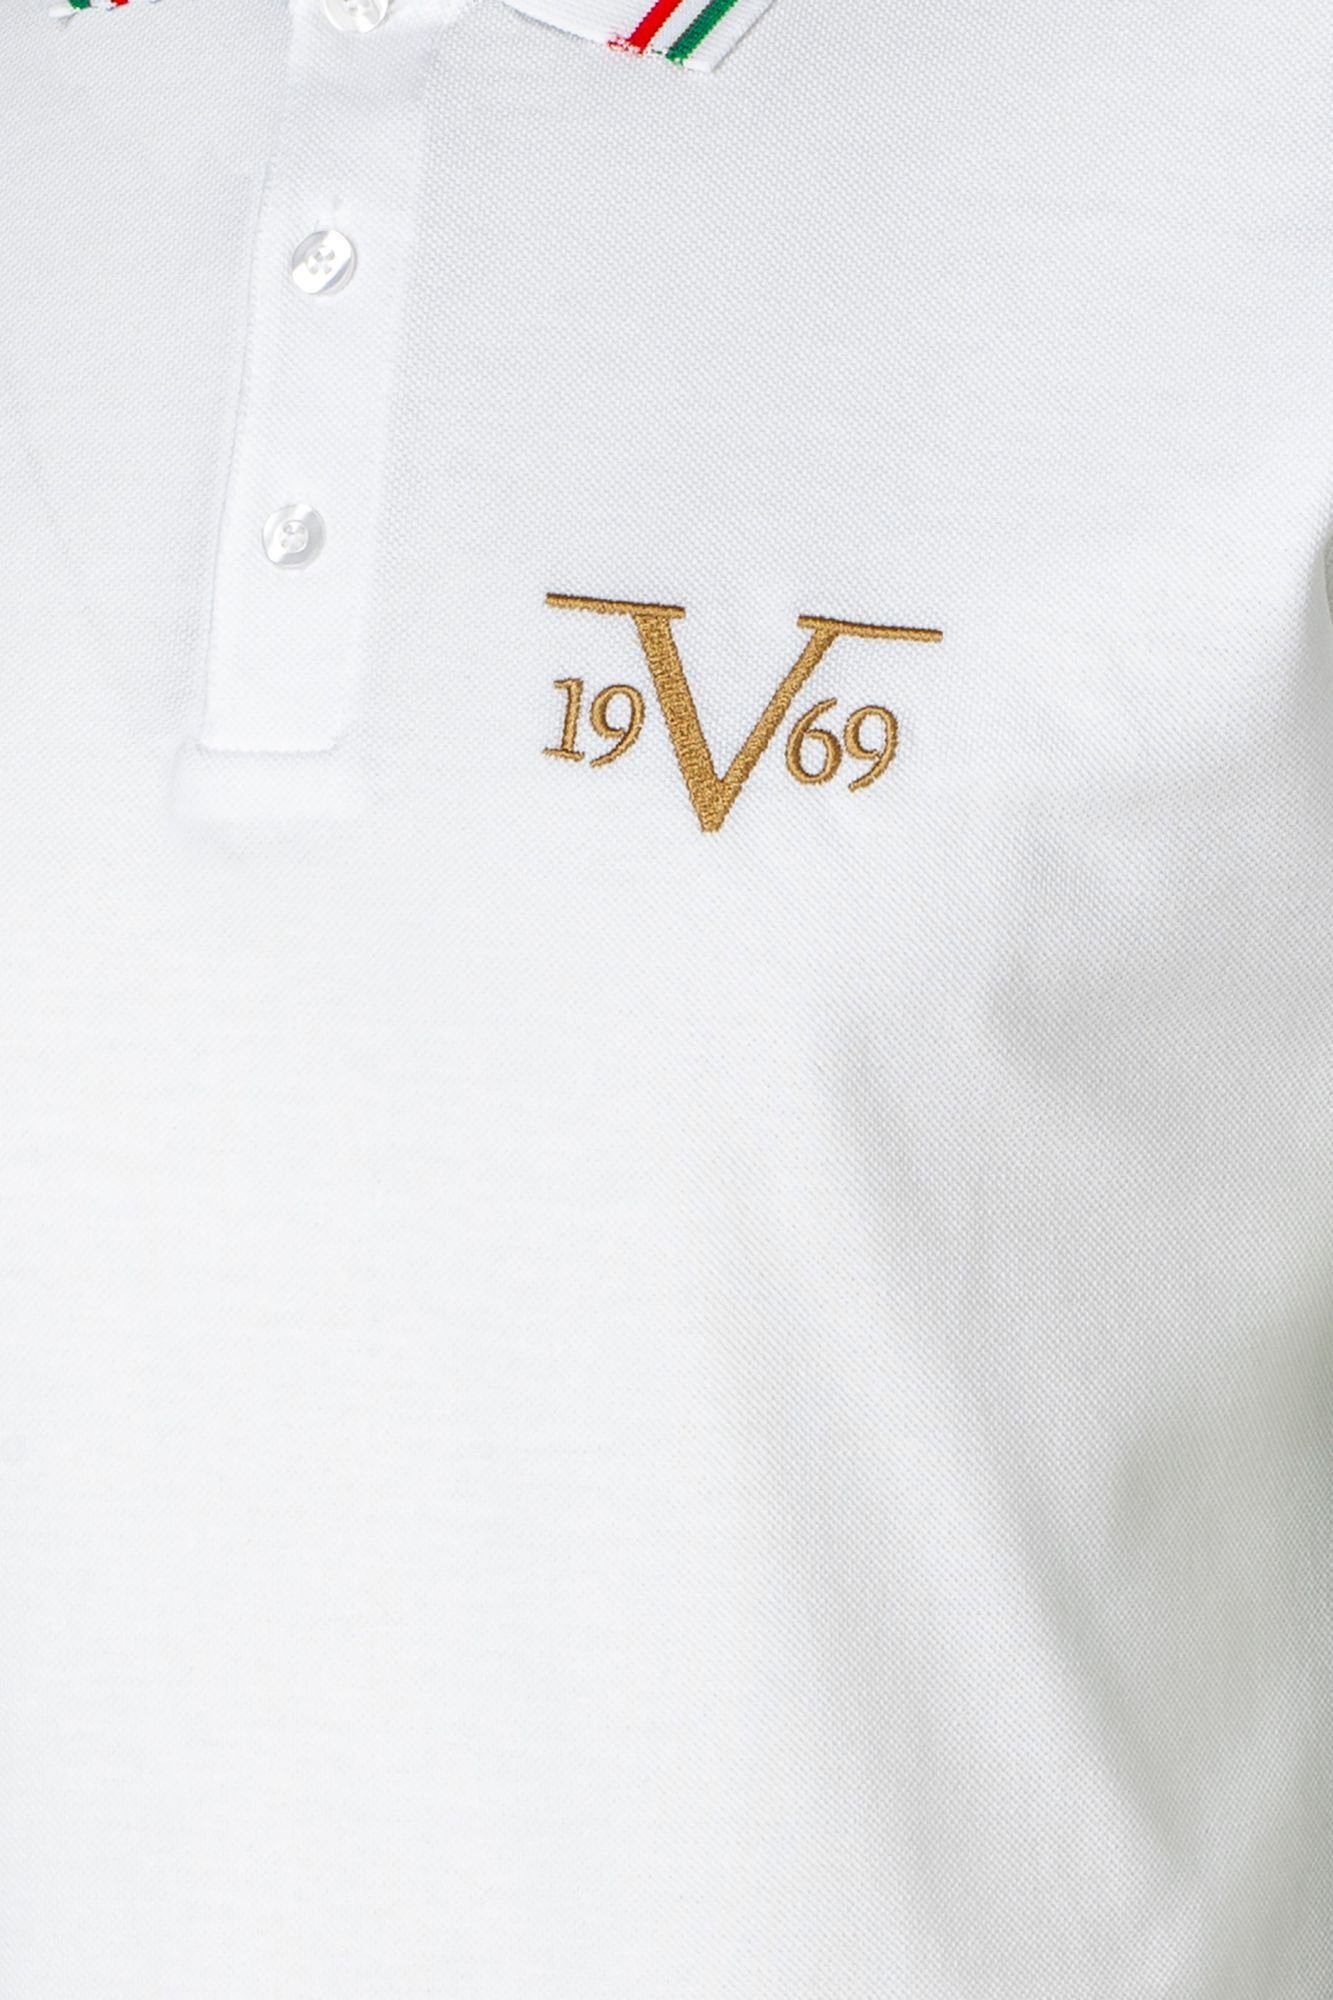 19V69 Italia by Poloshirt Versace Logo Polo